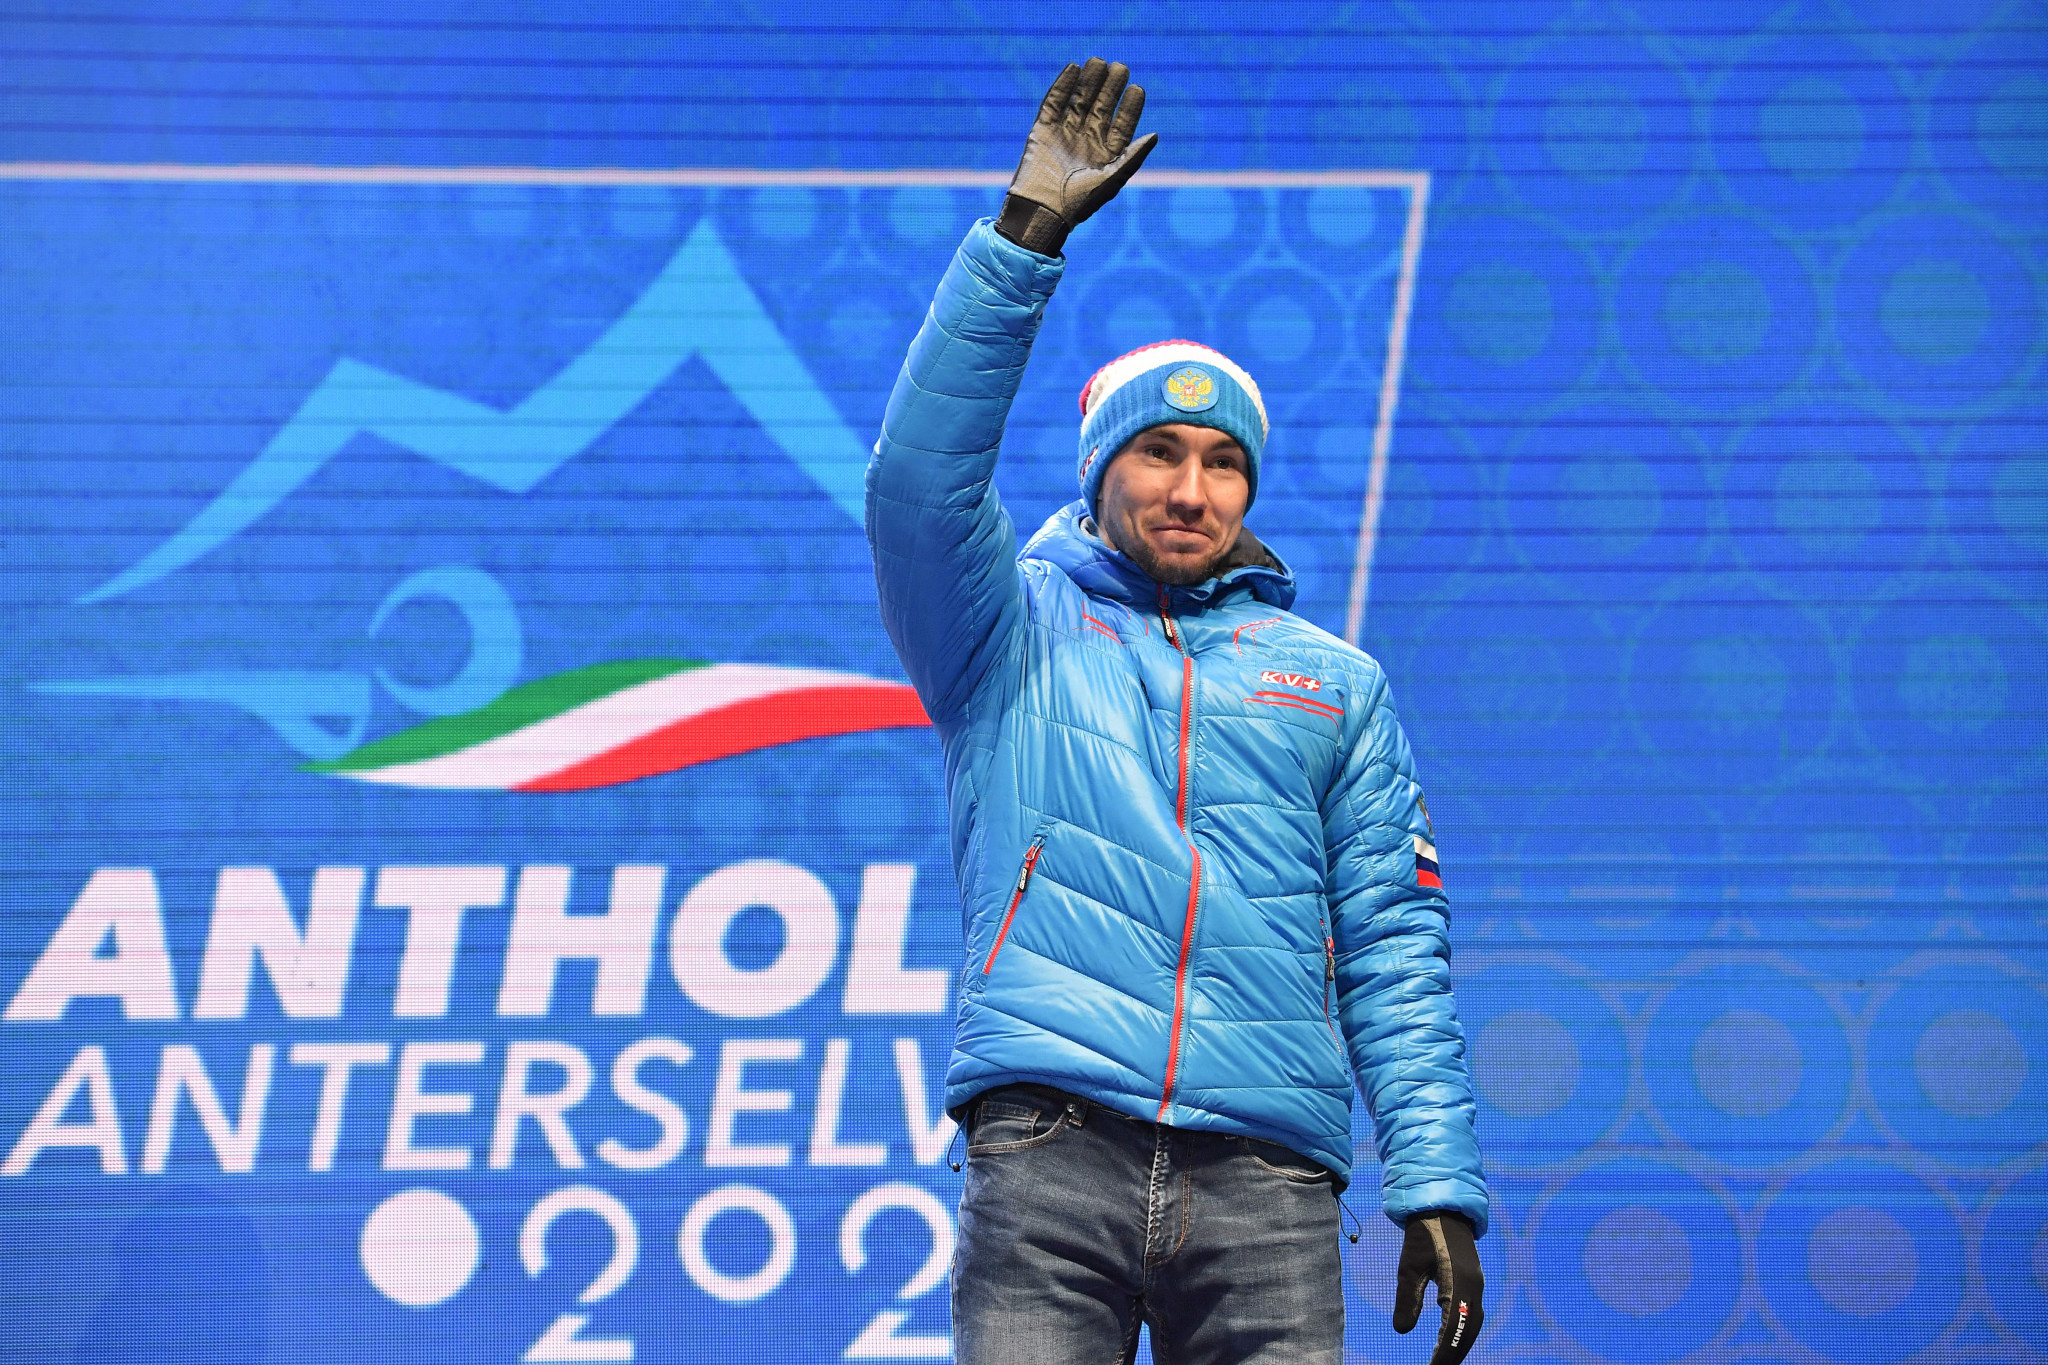 Alexander Loginov won two medals at the 2020 Biathlon World Championships ©Getty Images